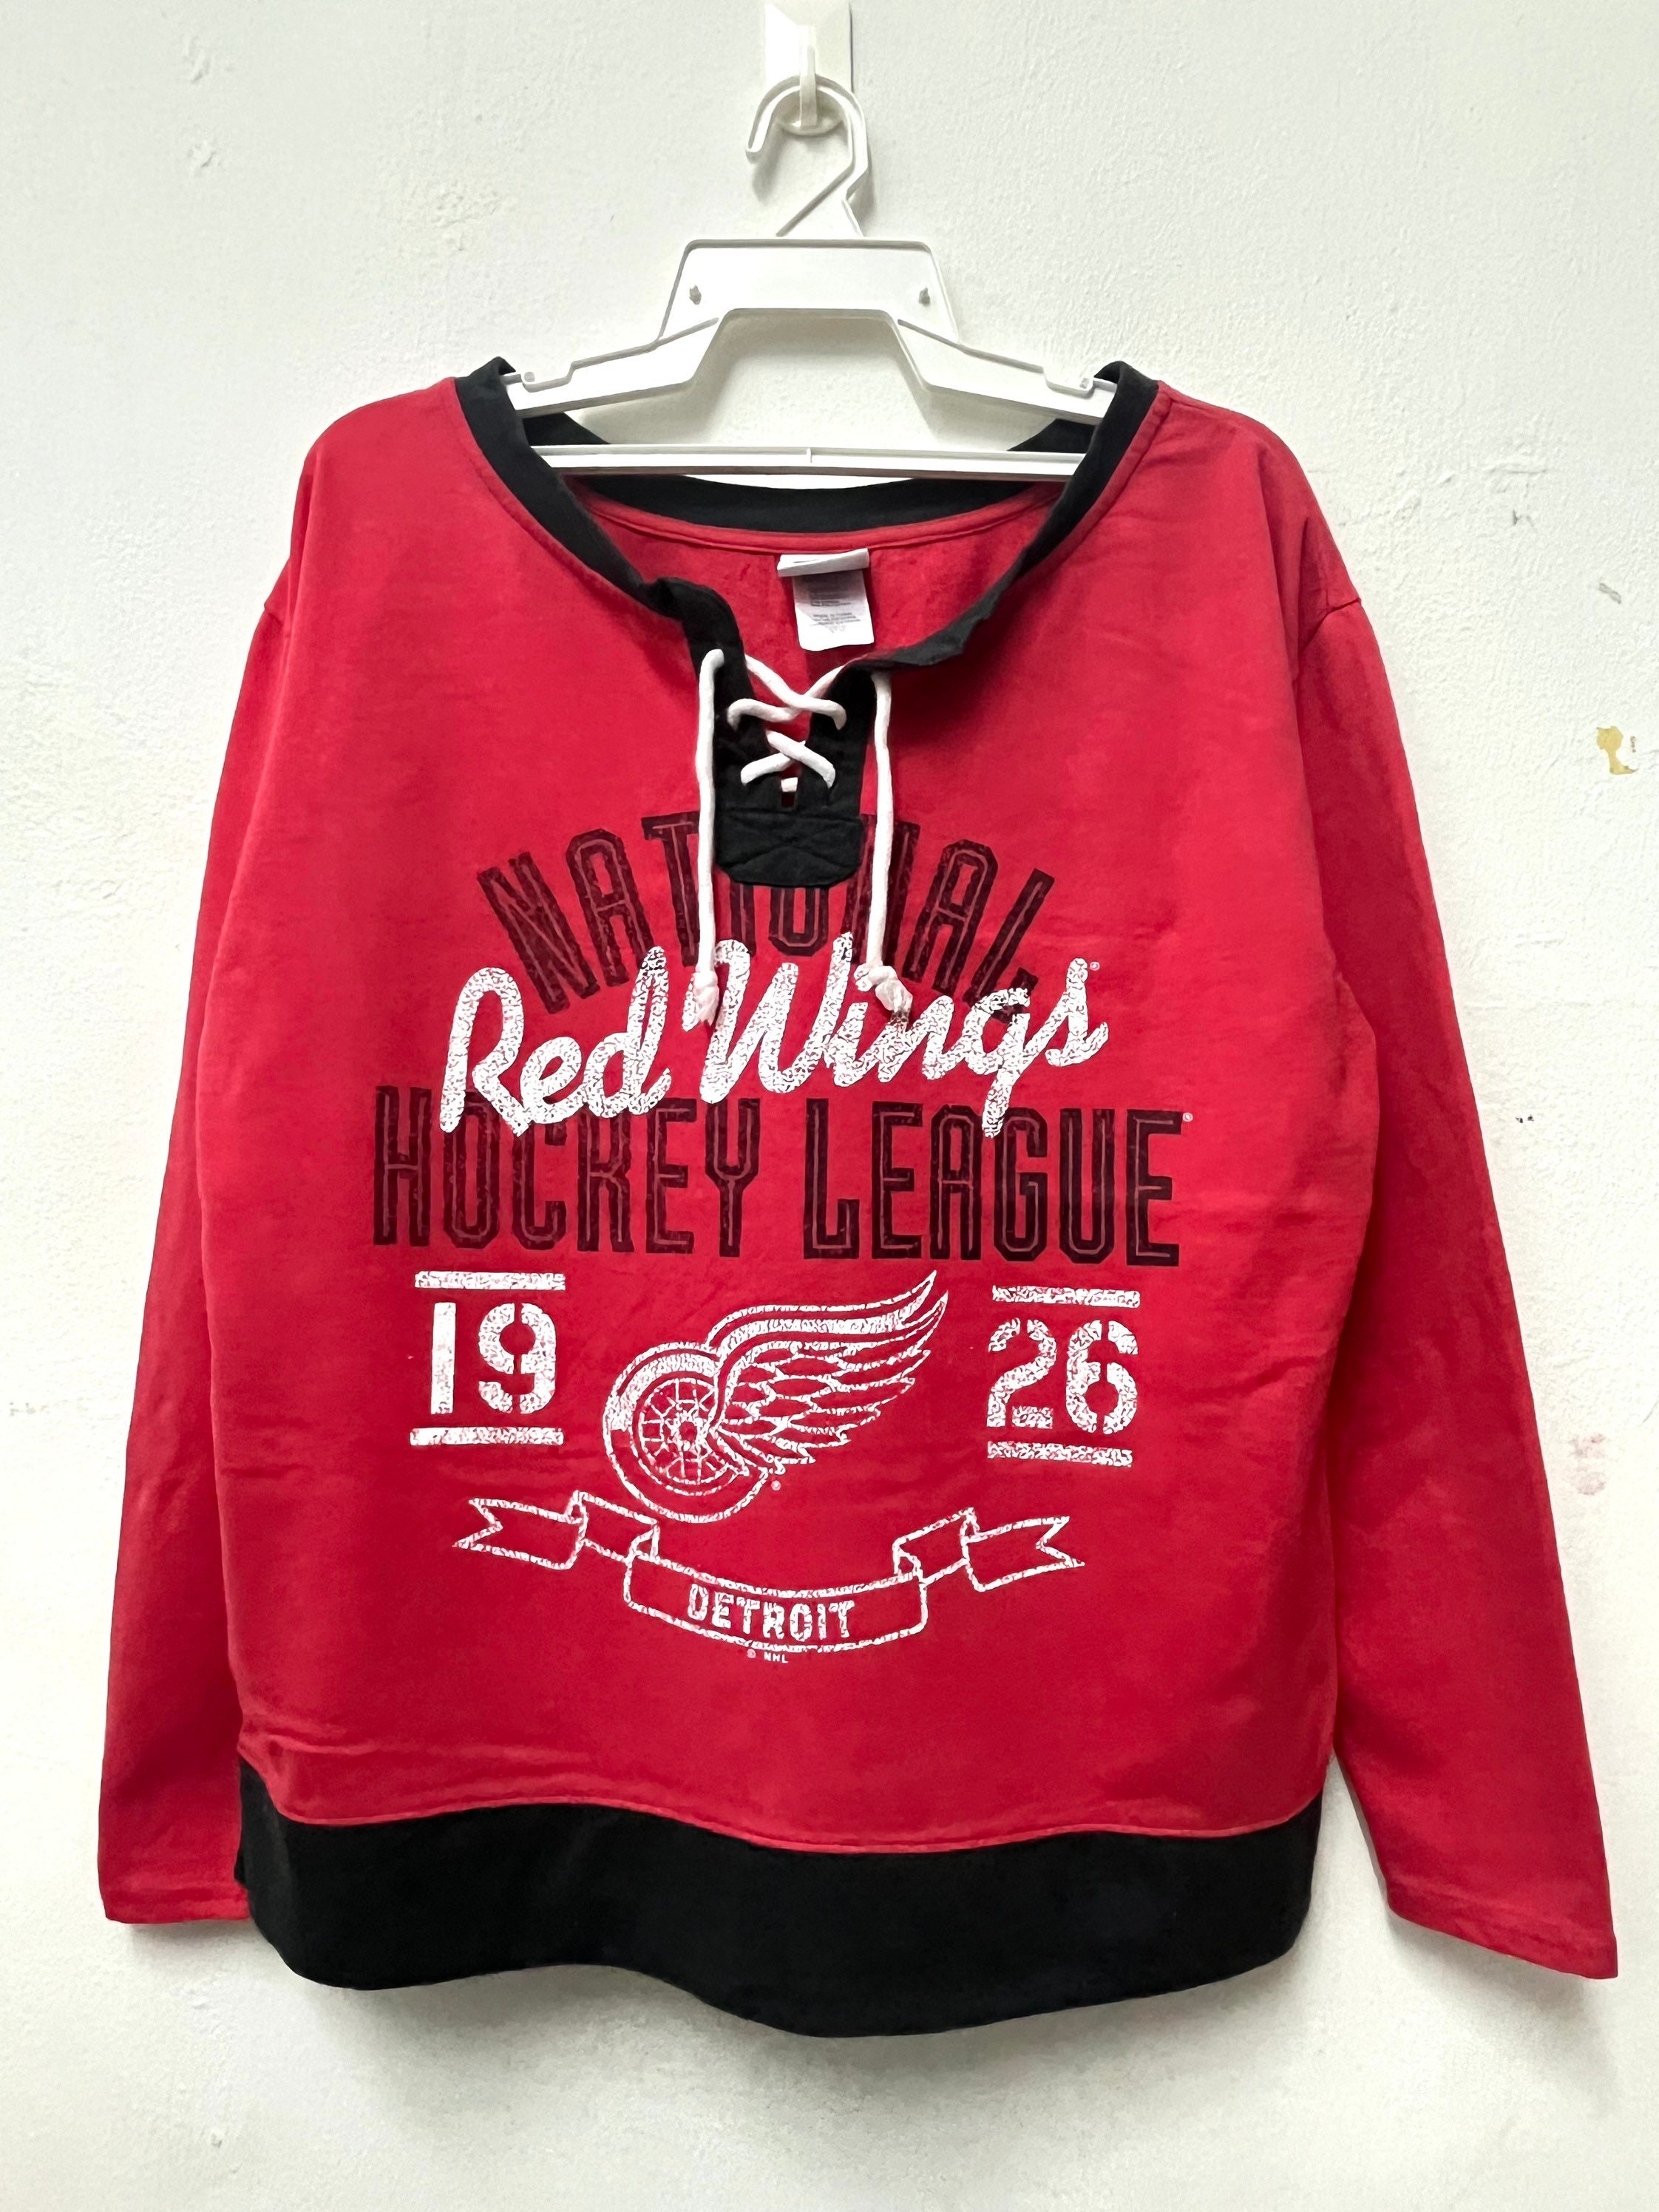 Lucas Raymond Ice Hockey Winger Detroit Red Wings T-Shirt, hoodie